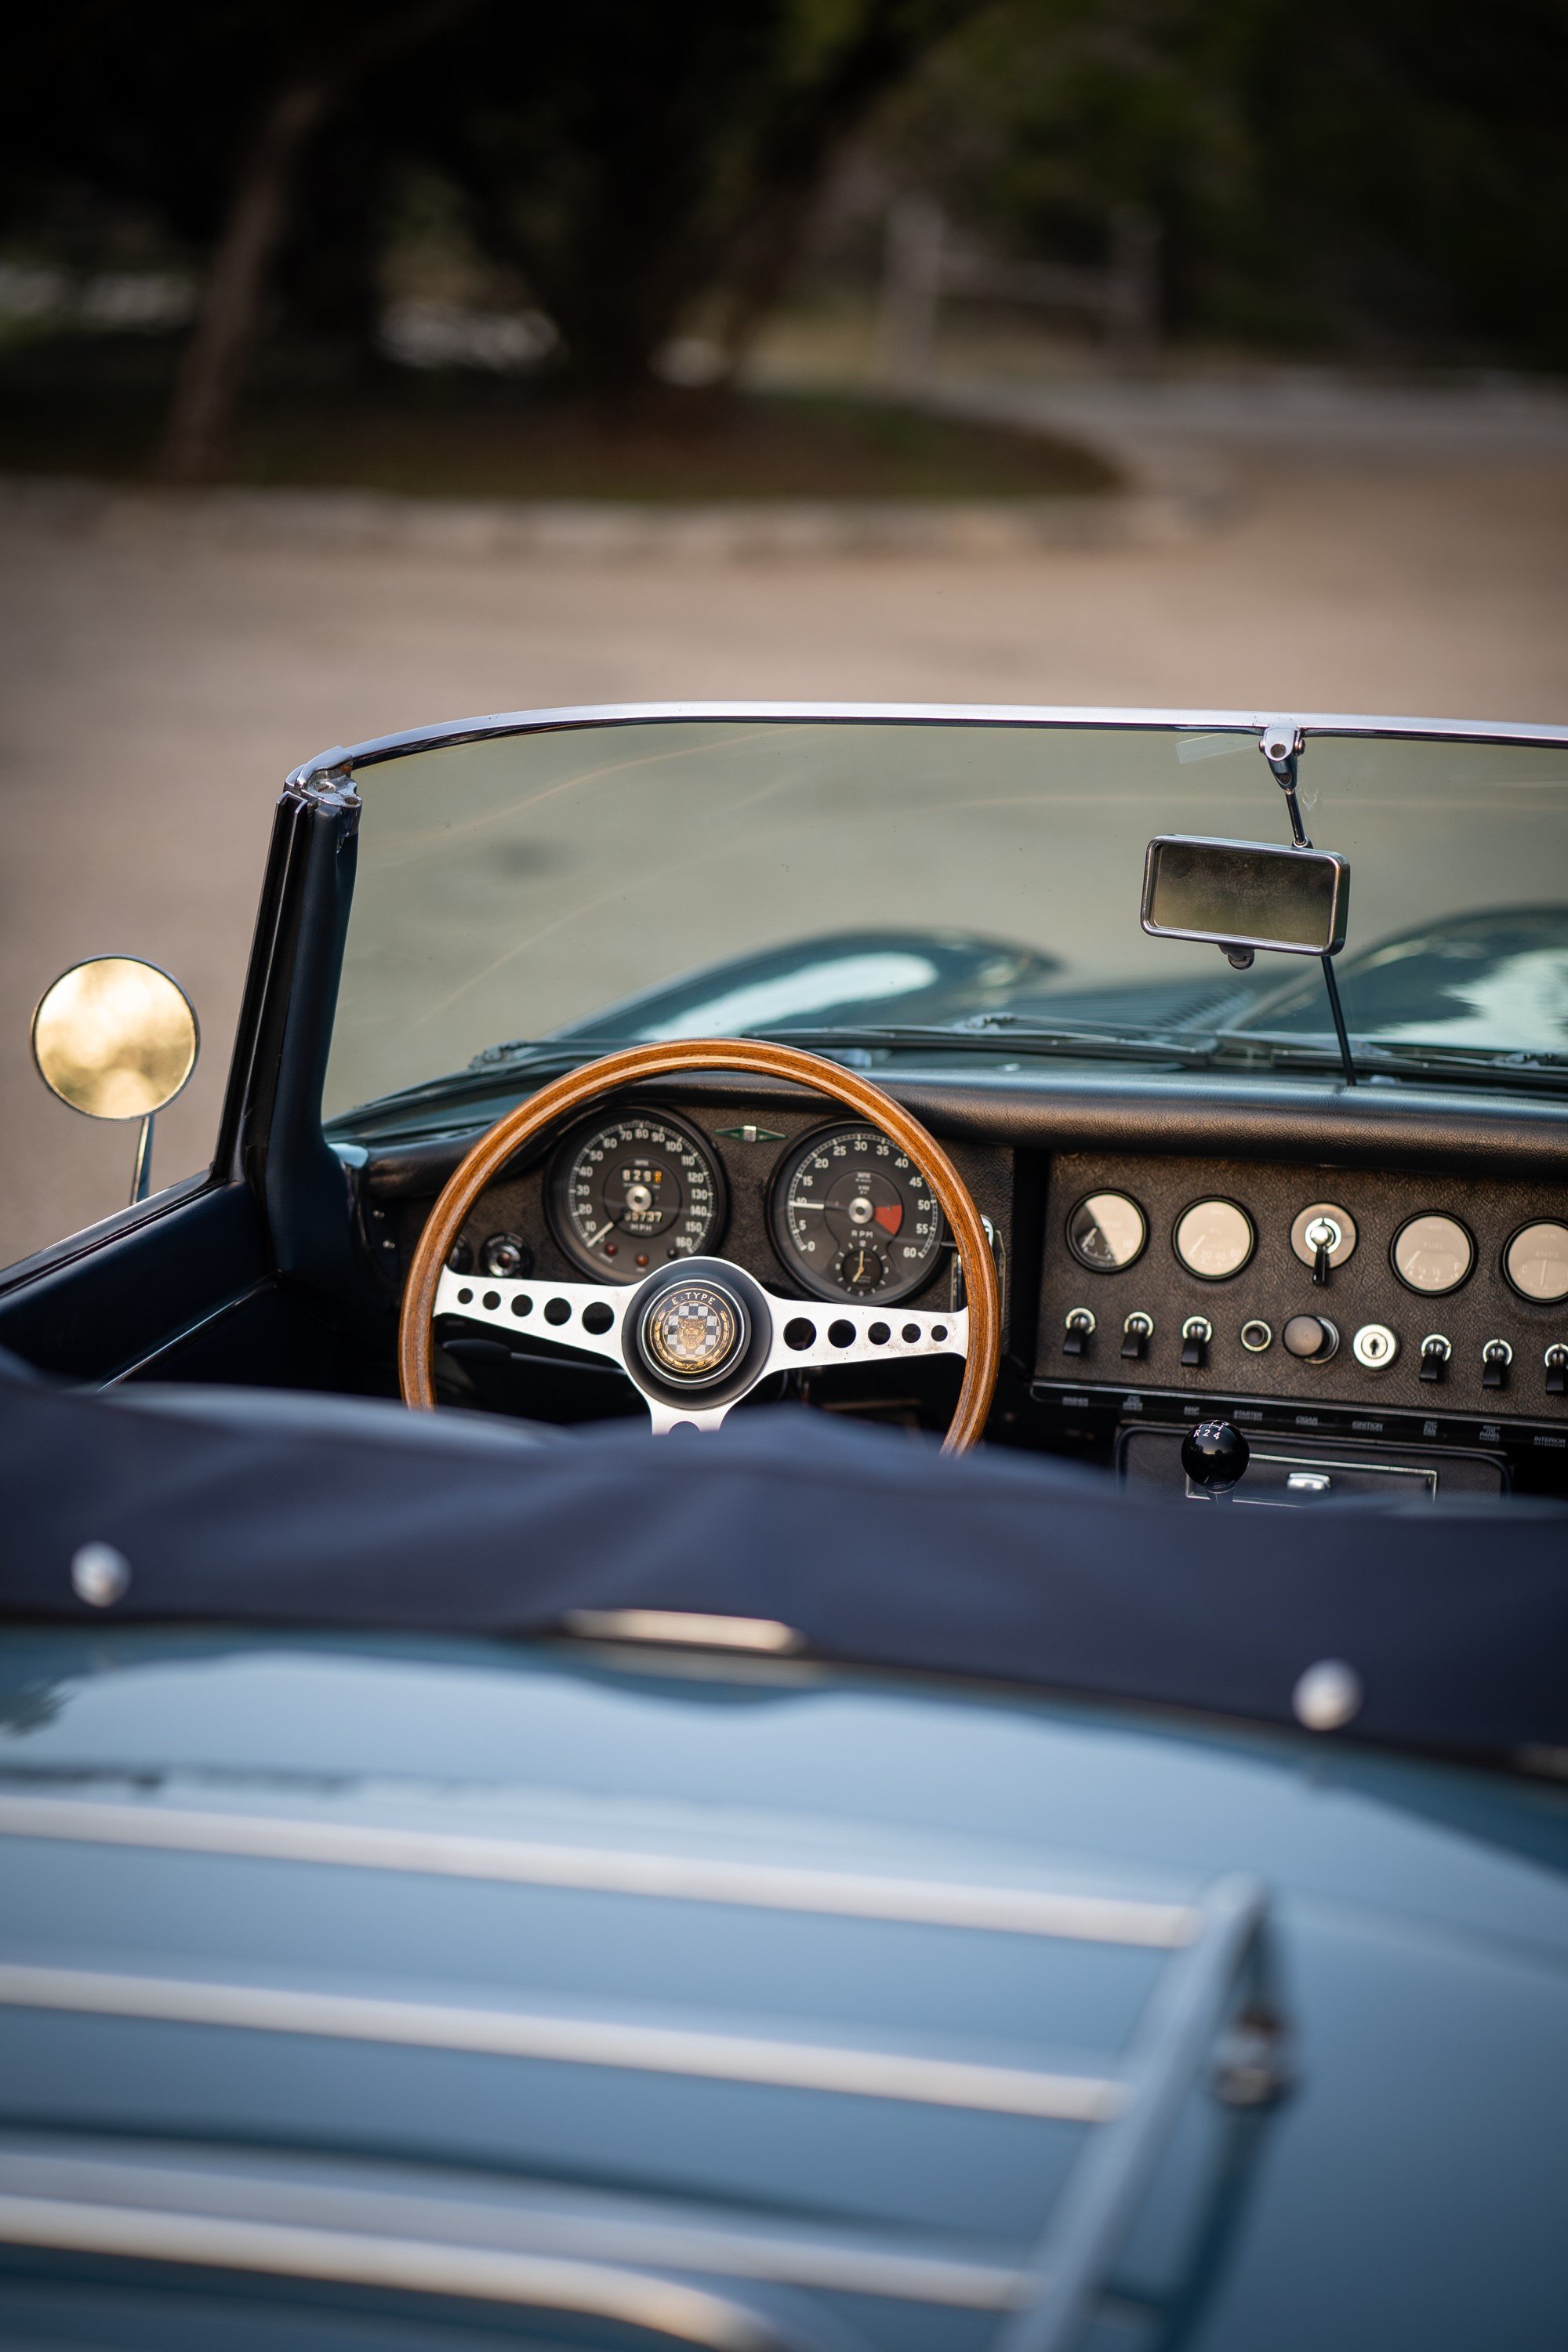 1966 Jaguar XKE interior and luggage rack